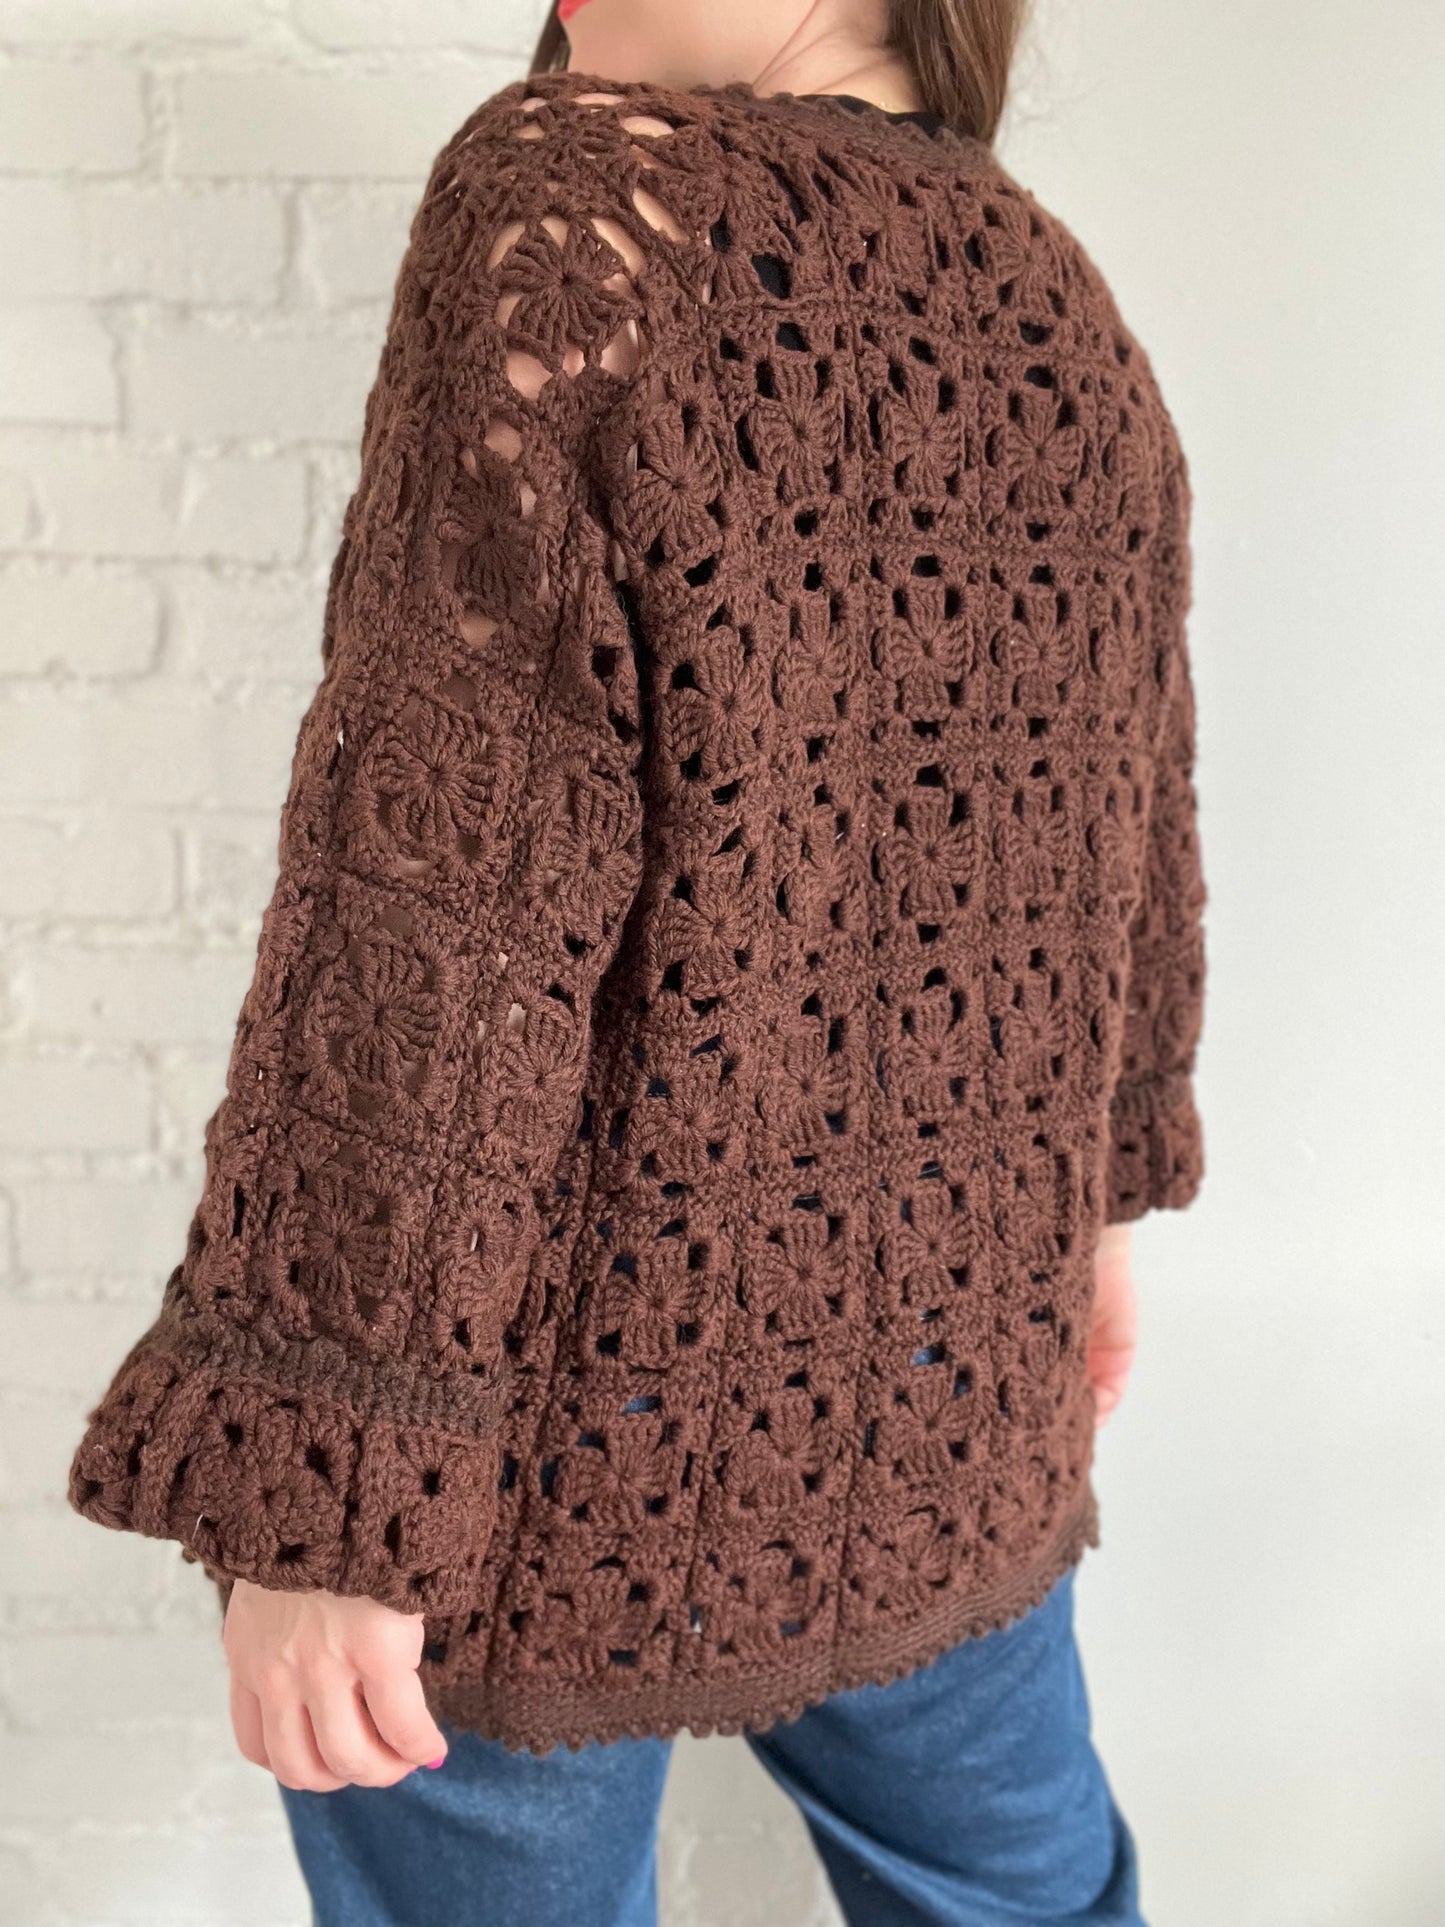 Chocolate Brown Crochet Cardigan - One Size